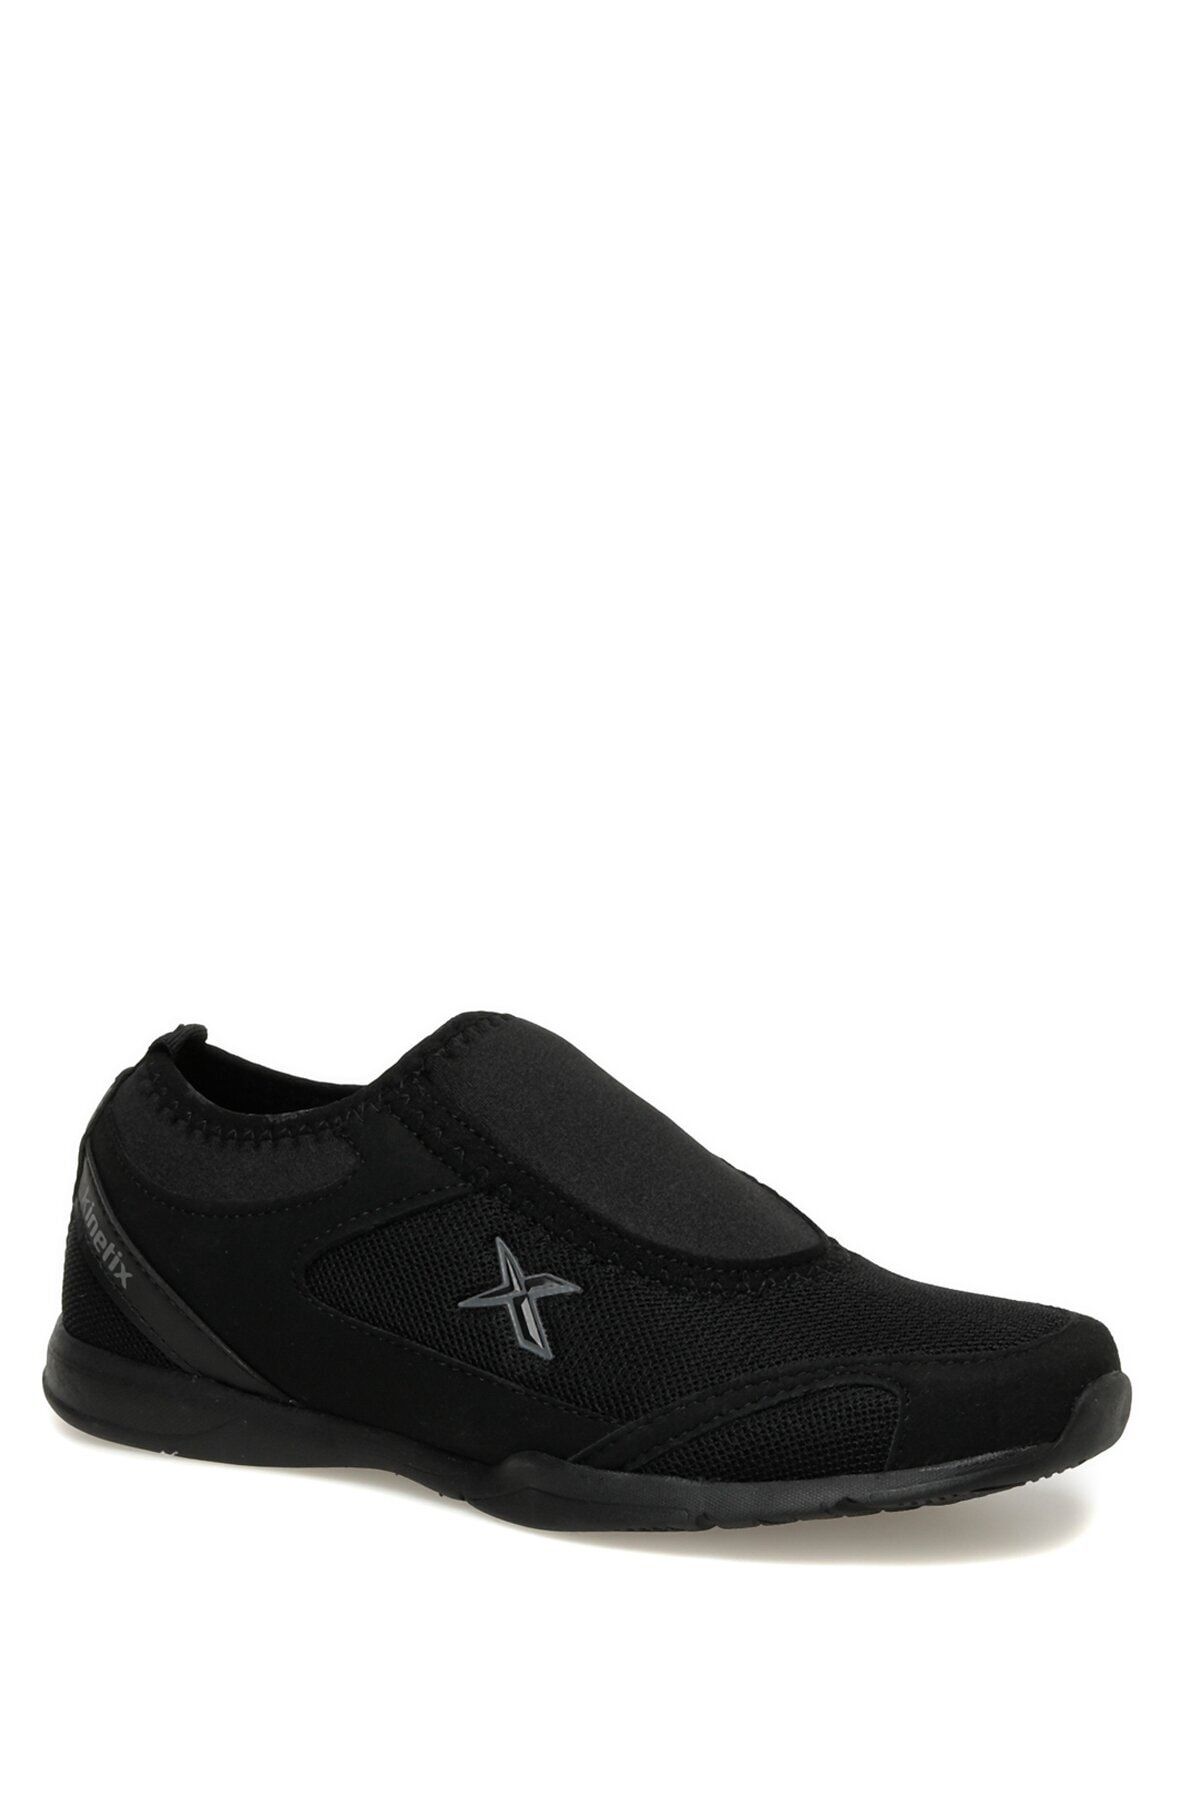 Kinetix Macon Tx 3fx Siyah Unisex Comfort Ayakkabı